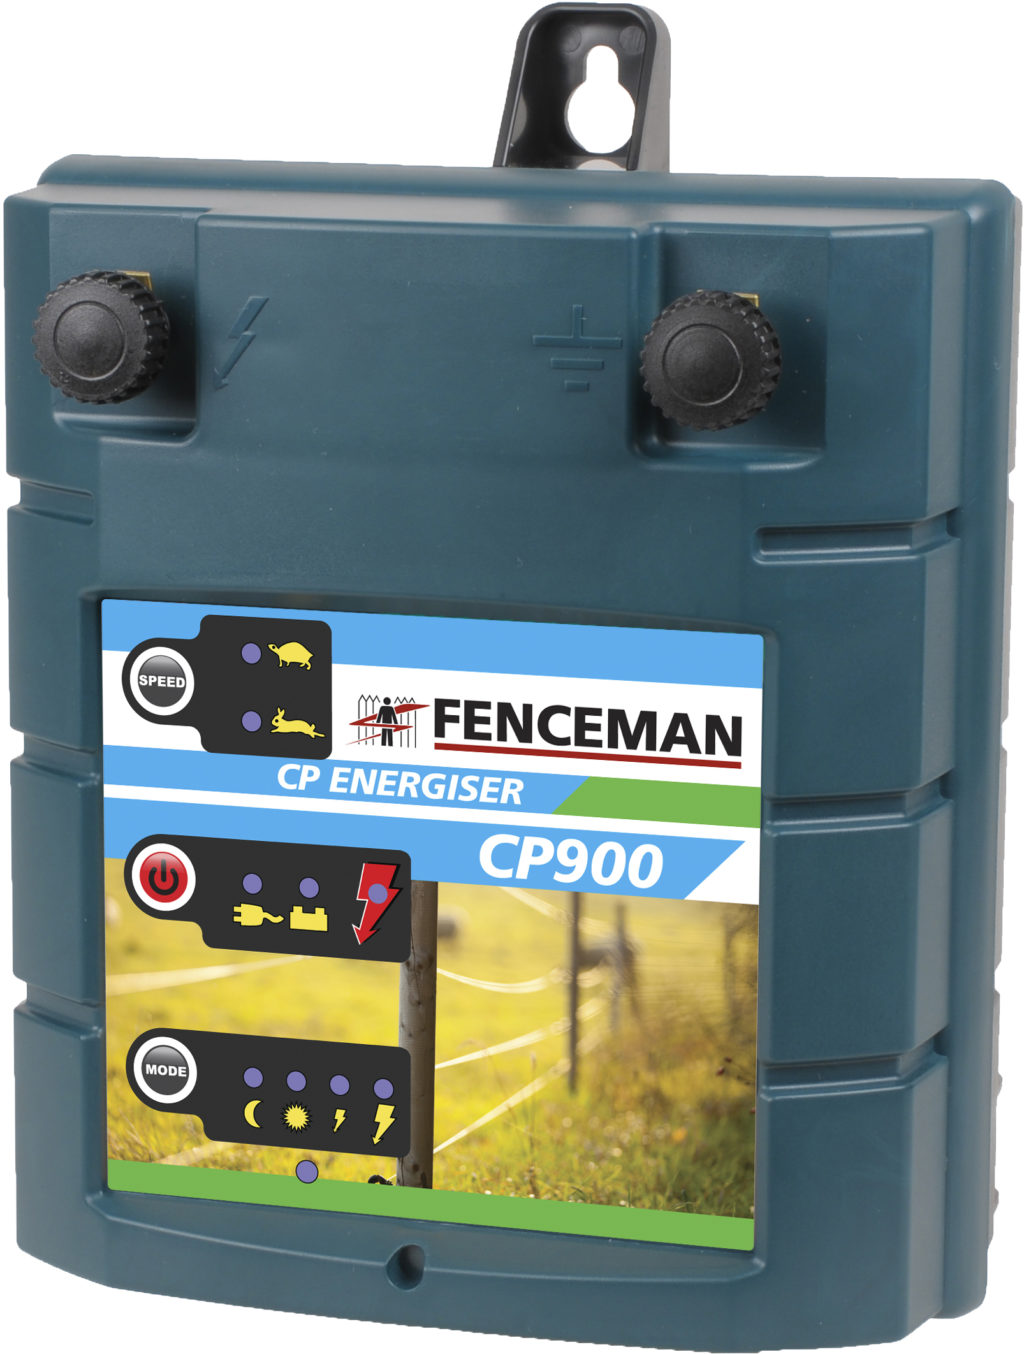 Fenceman Energiser CP900 (A)